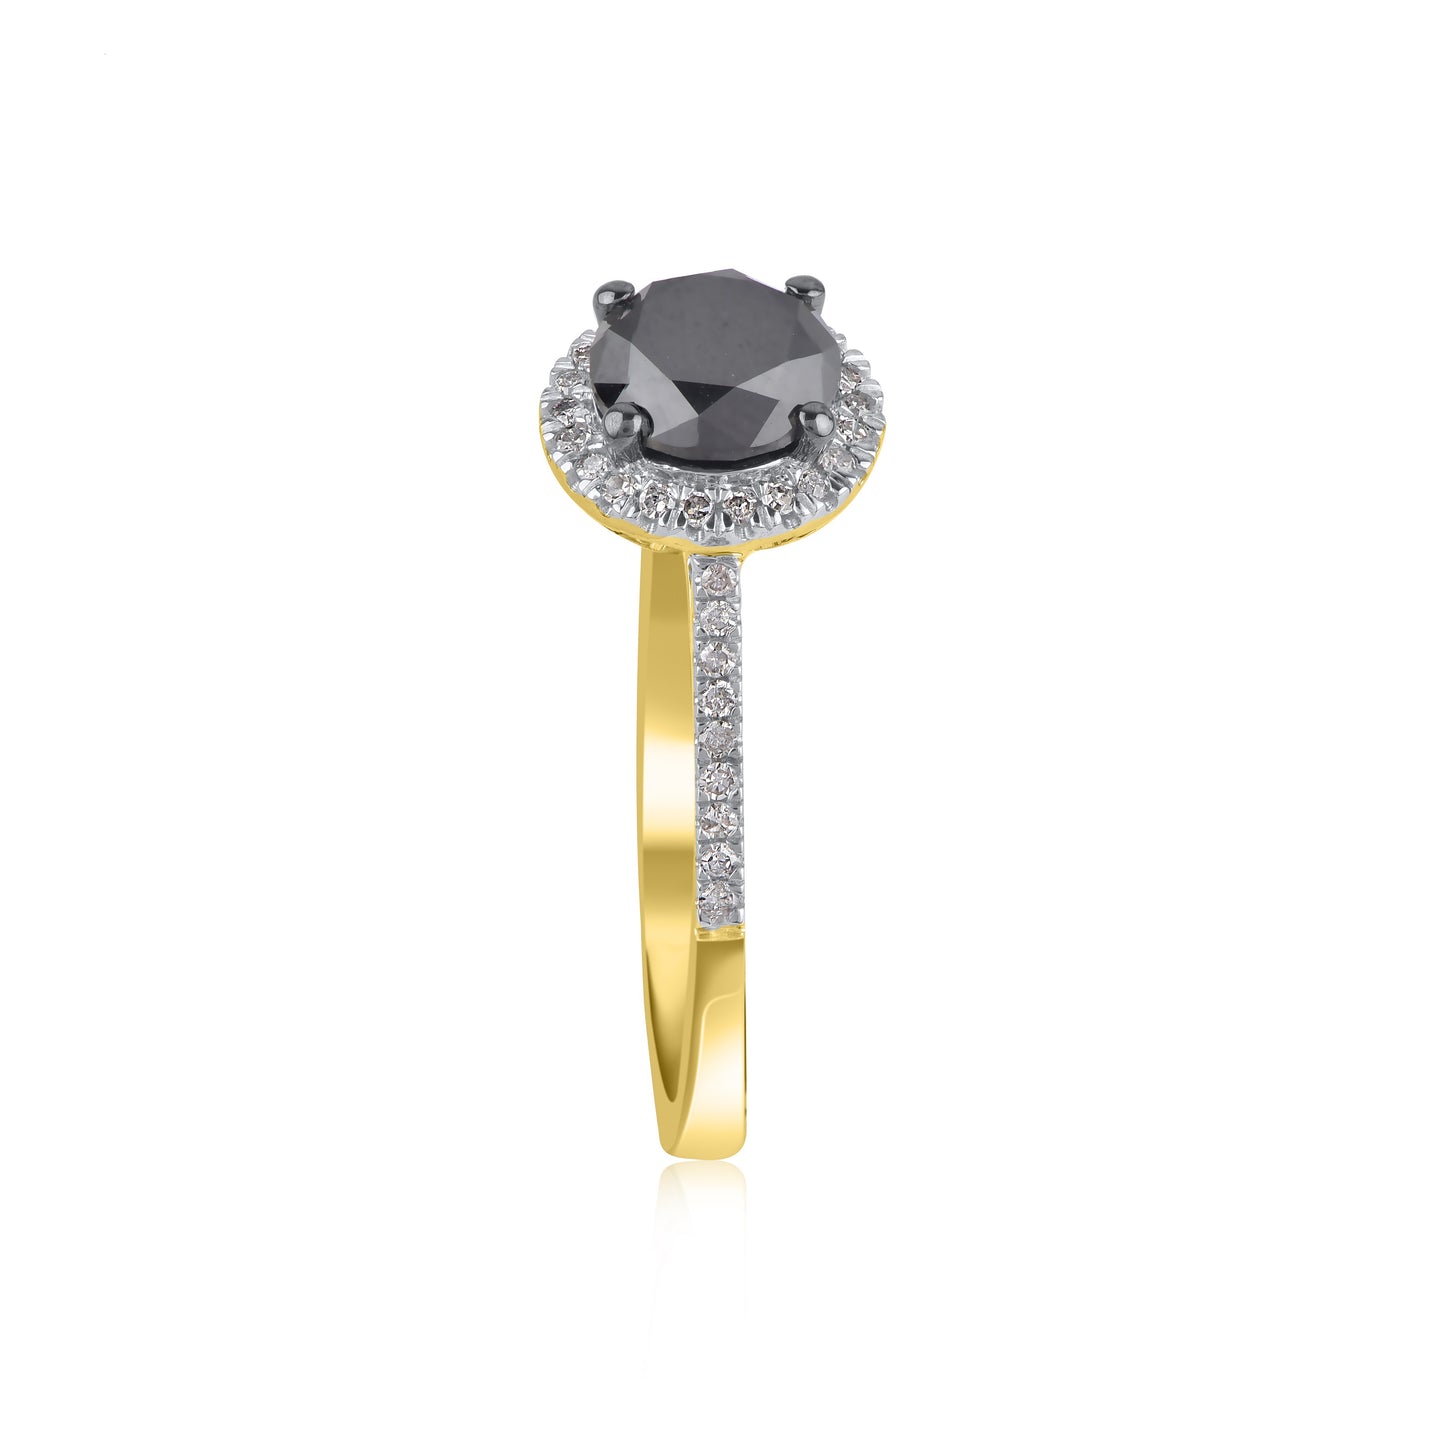 Black Diamond Halo Wedding Ring in 10K Gold